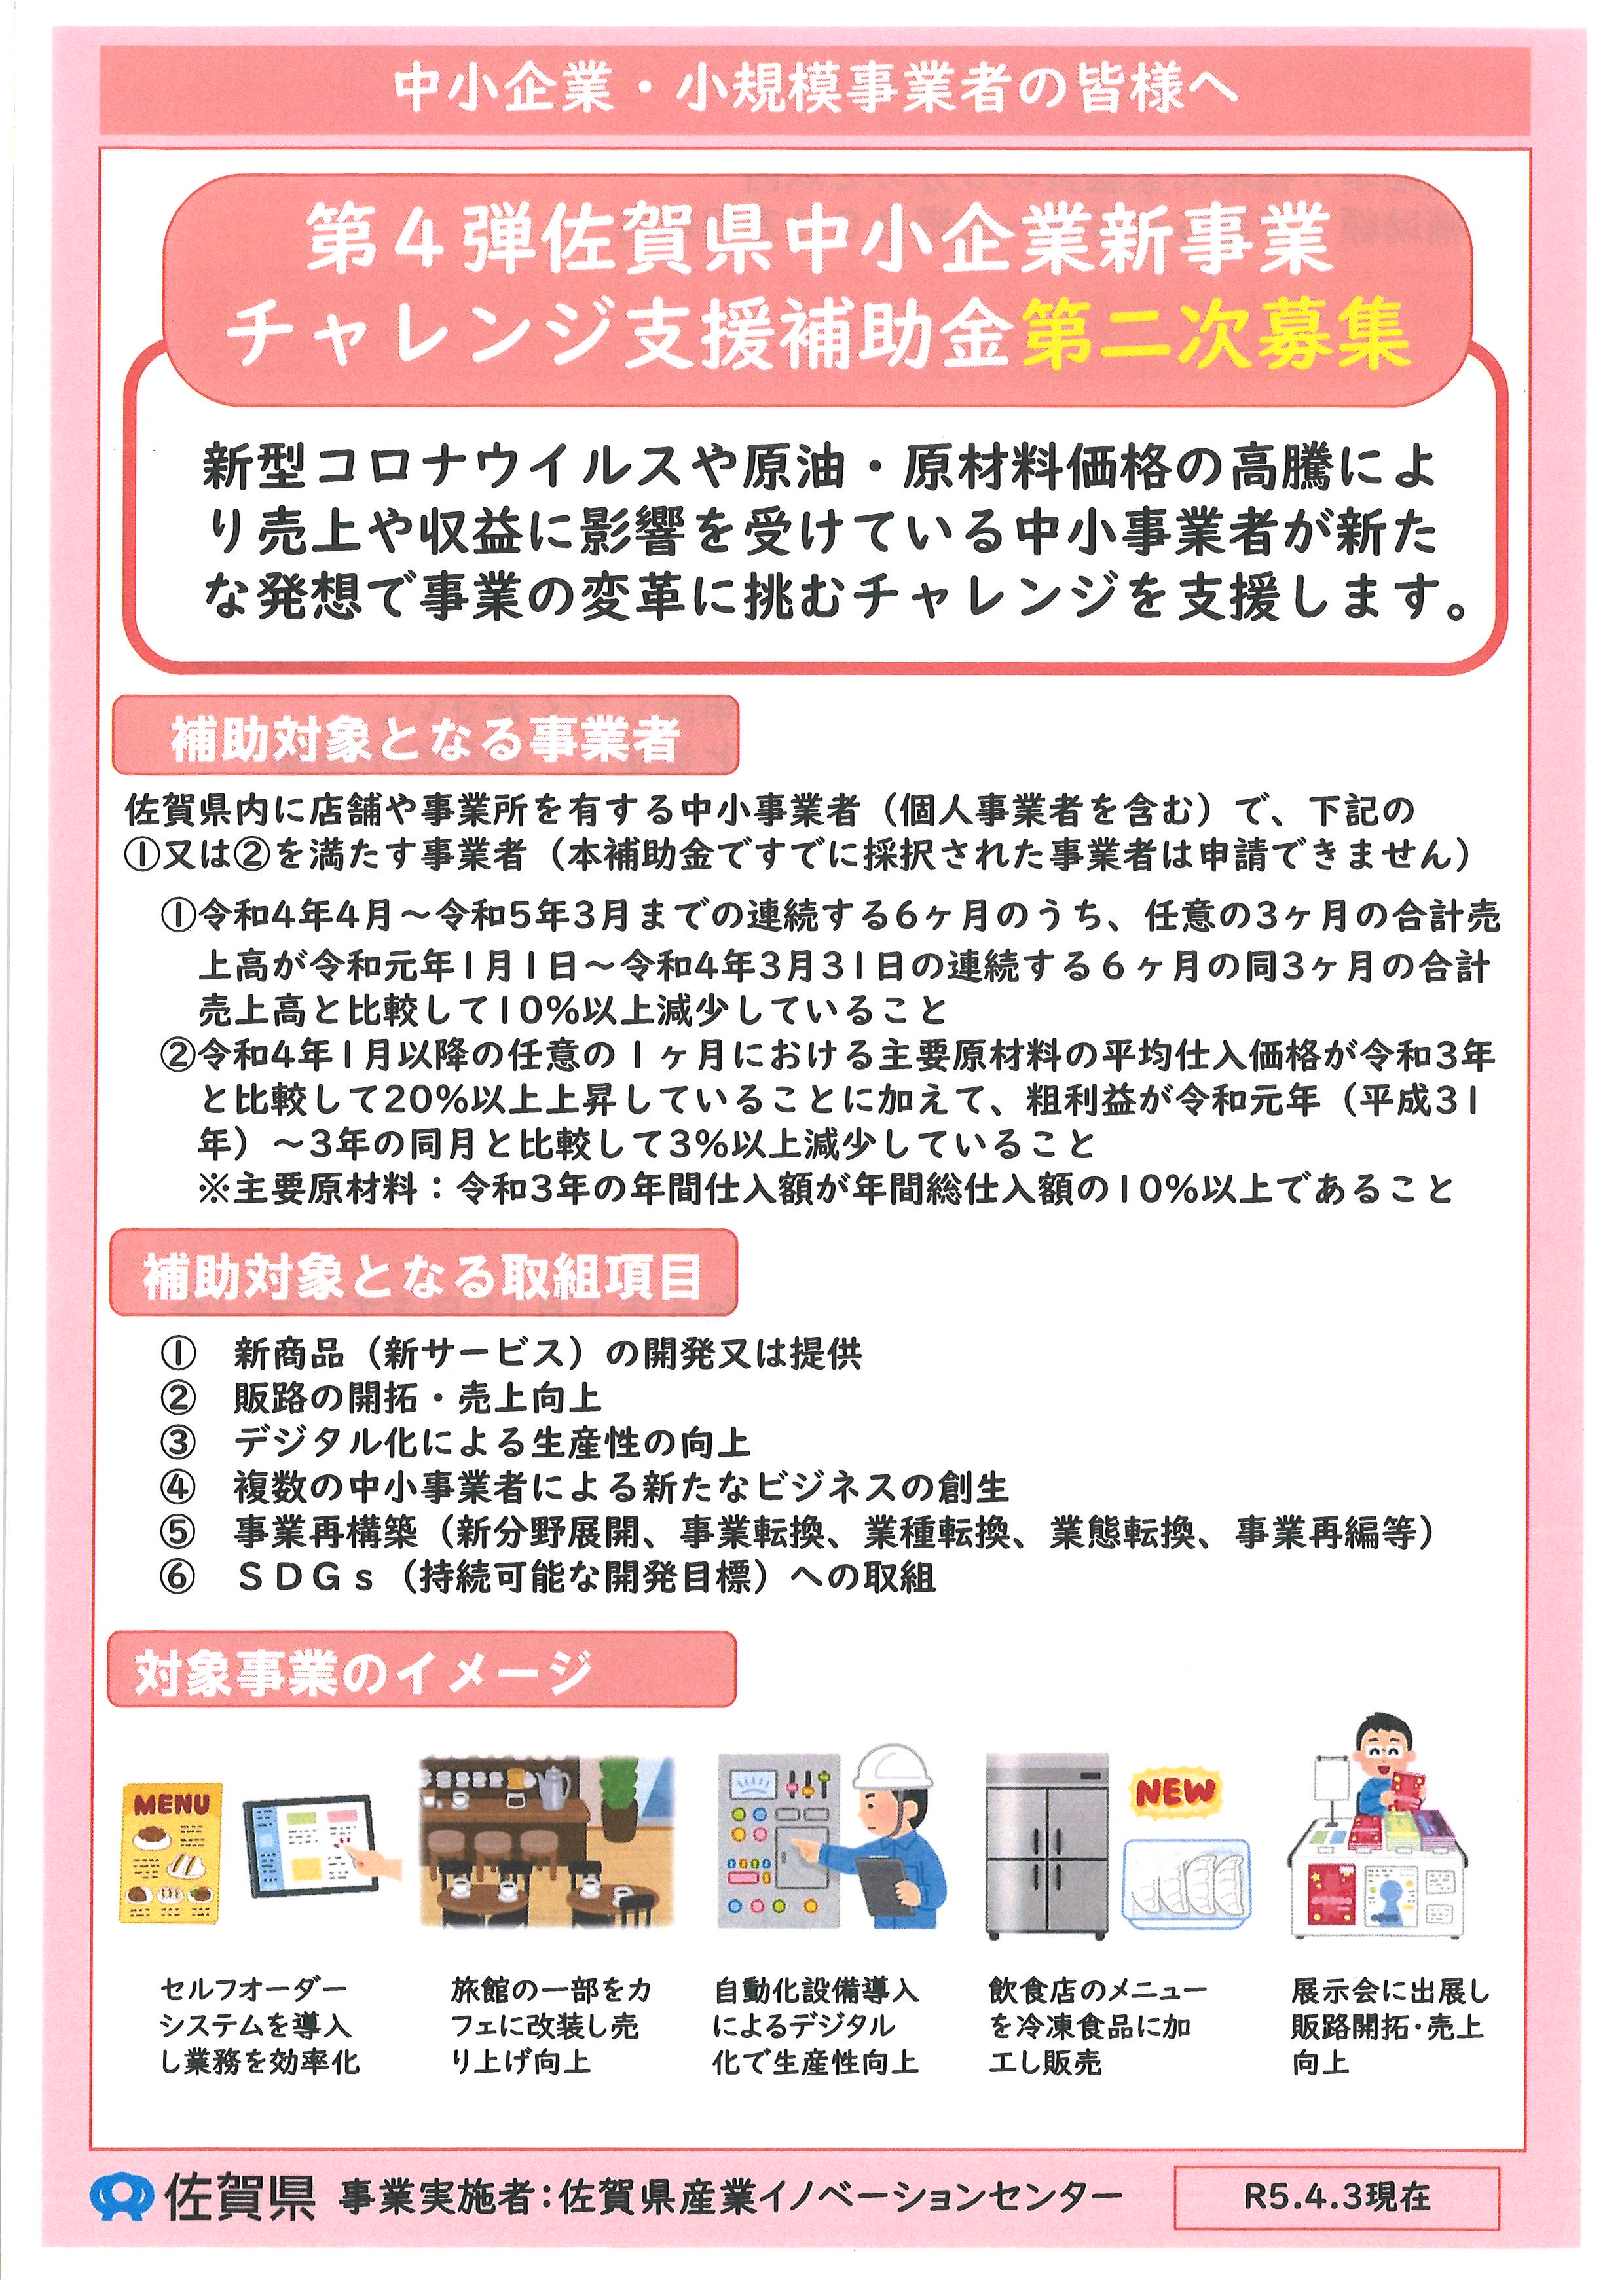 【二次公募】第4弾佐賀県中小企業新事業チャレンジ支援補助金